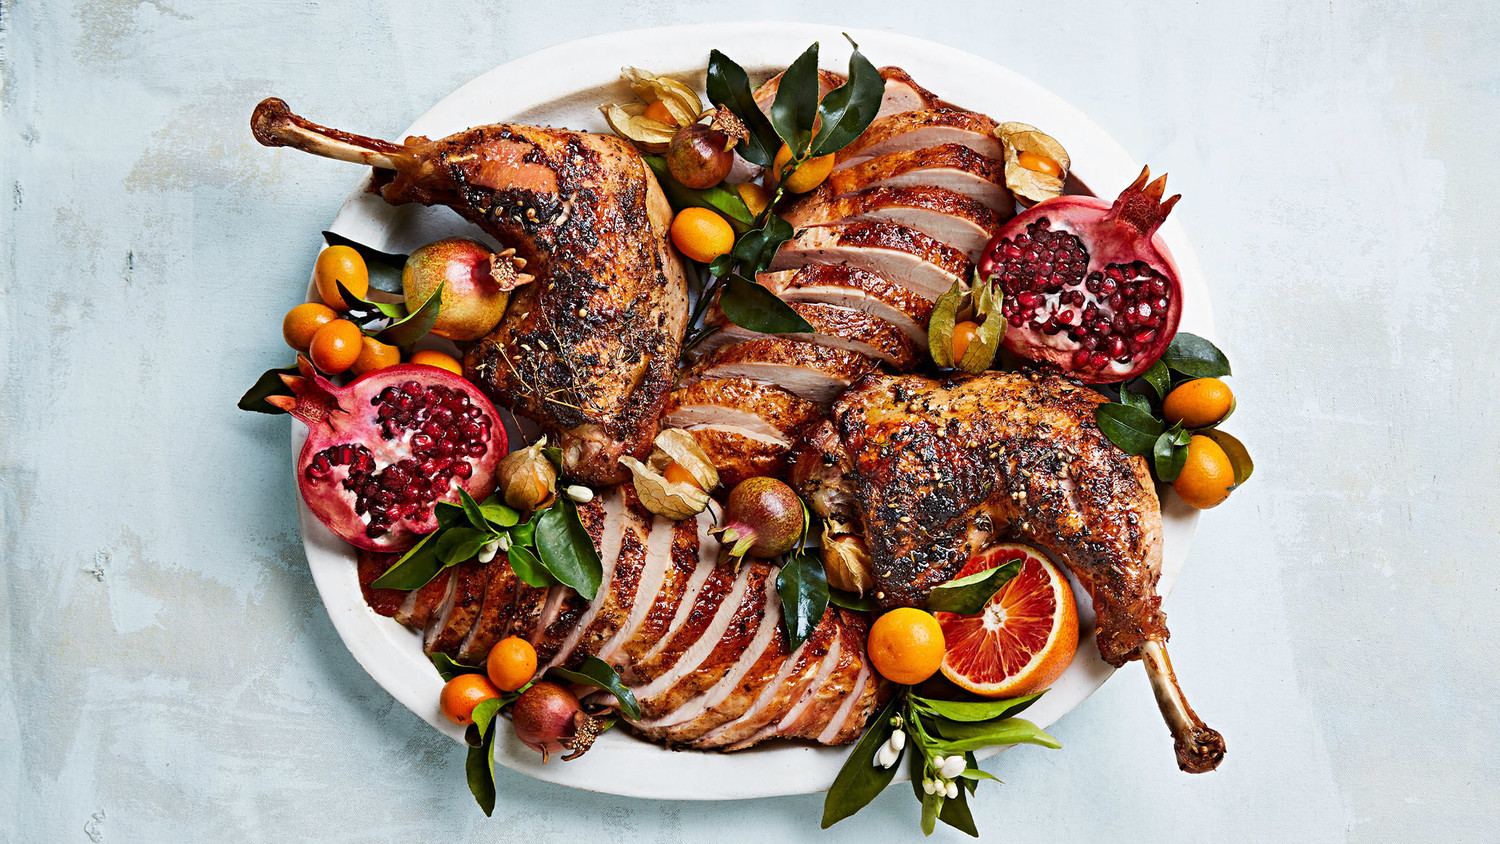 Martha Stewart Thanksgiving Turkey
 Our Mouthwatering Menu for a Modern Thanksgiving Feast